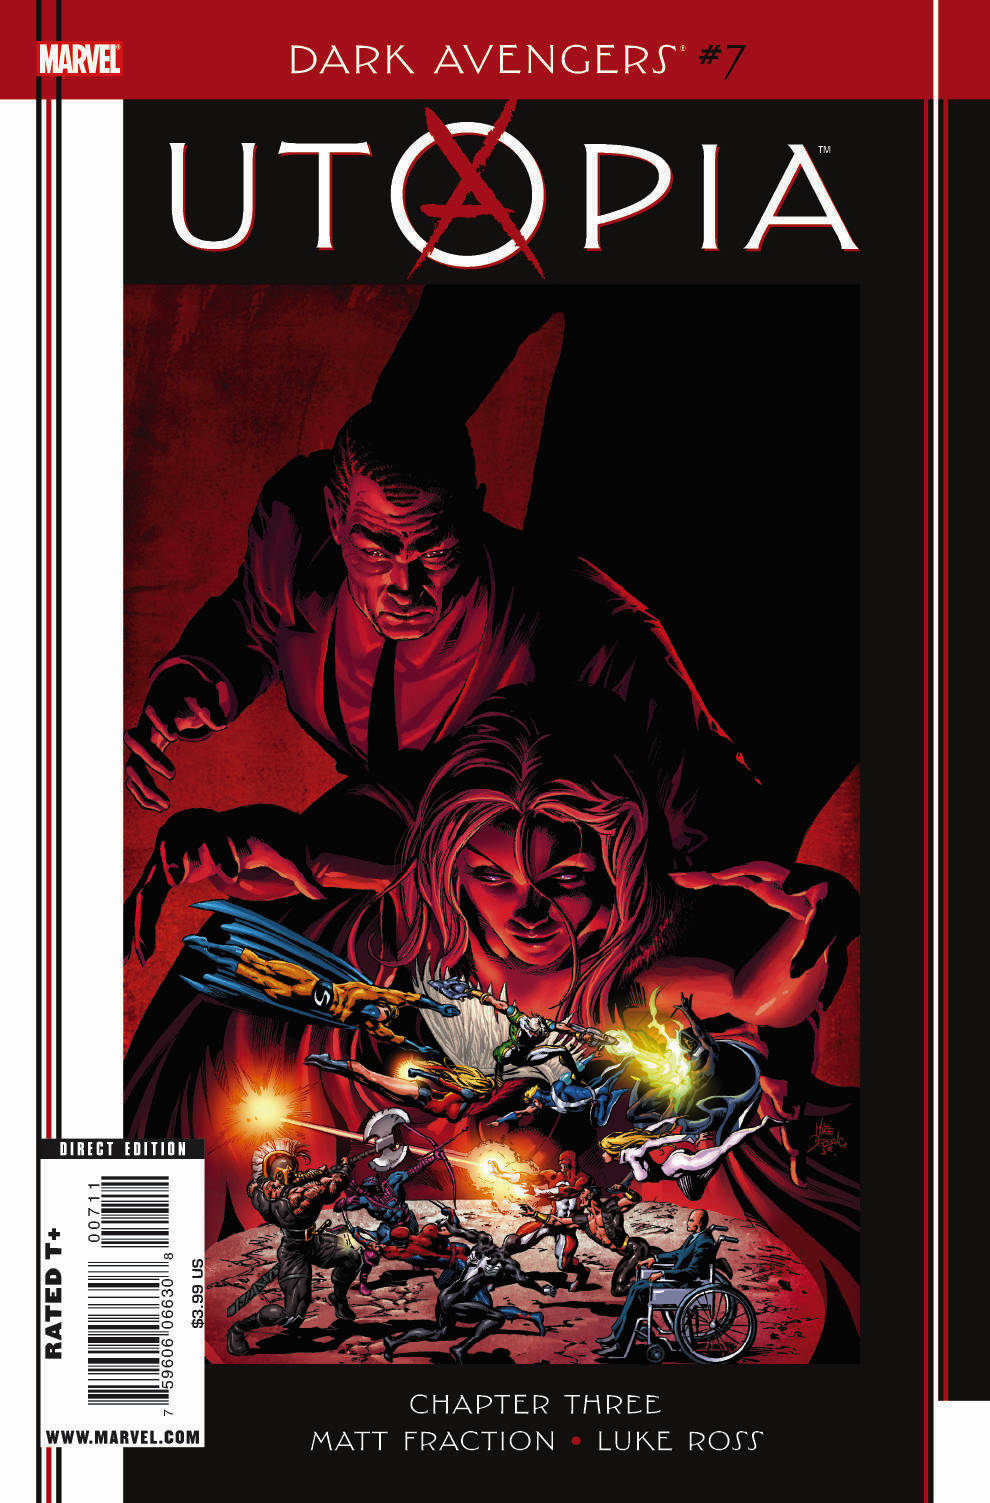 Dark Avengers Vol. 1 #7